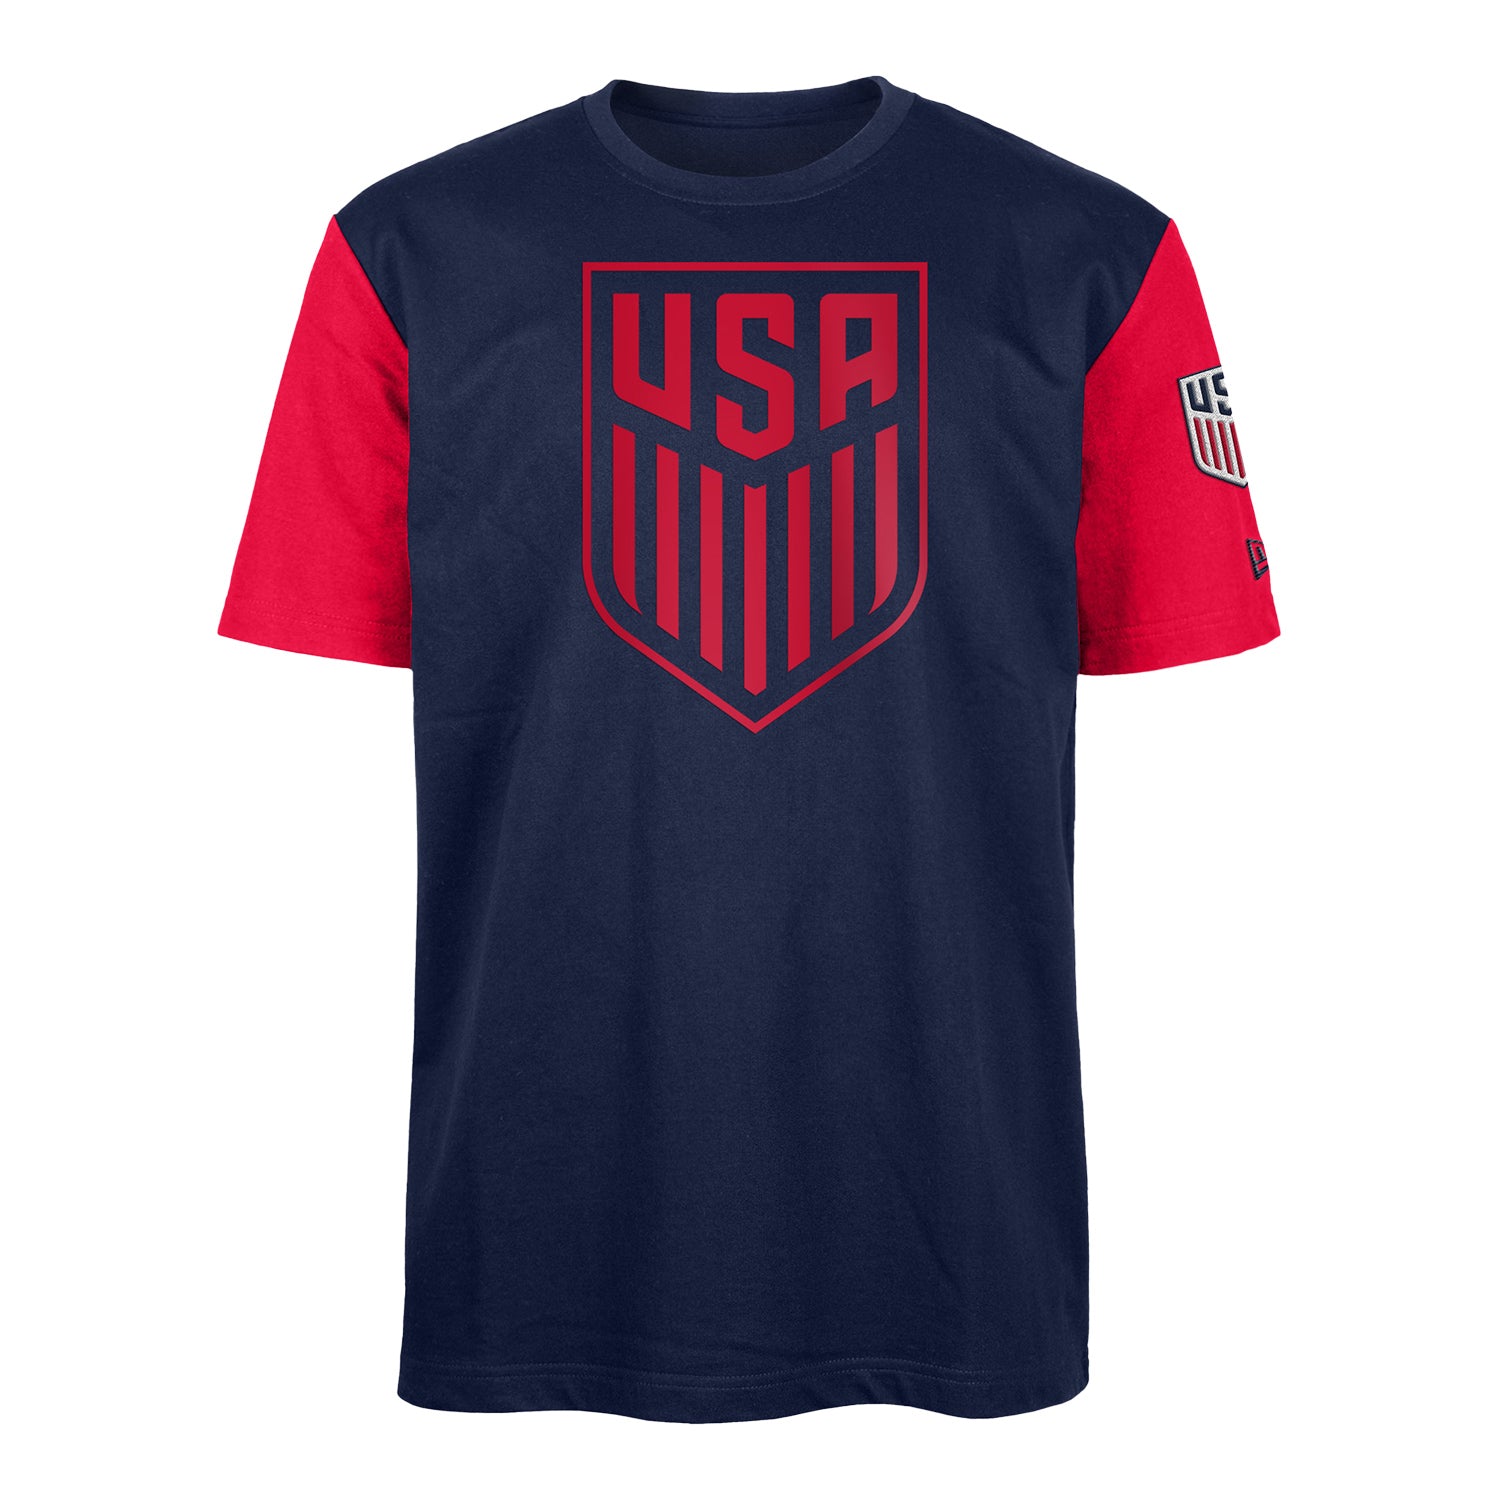 Men's New Era USMNT Crest Navy Tee - Official U.S. Soccer Store